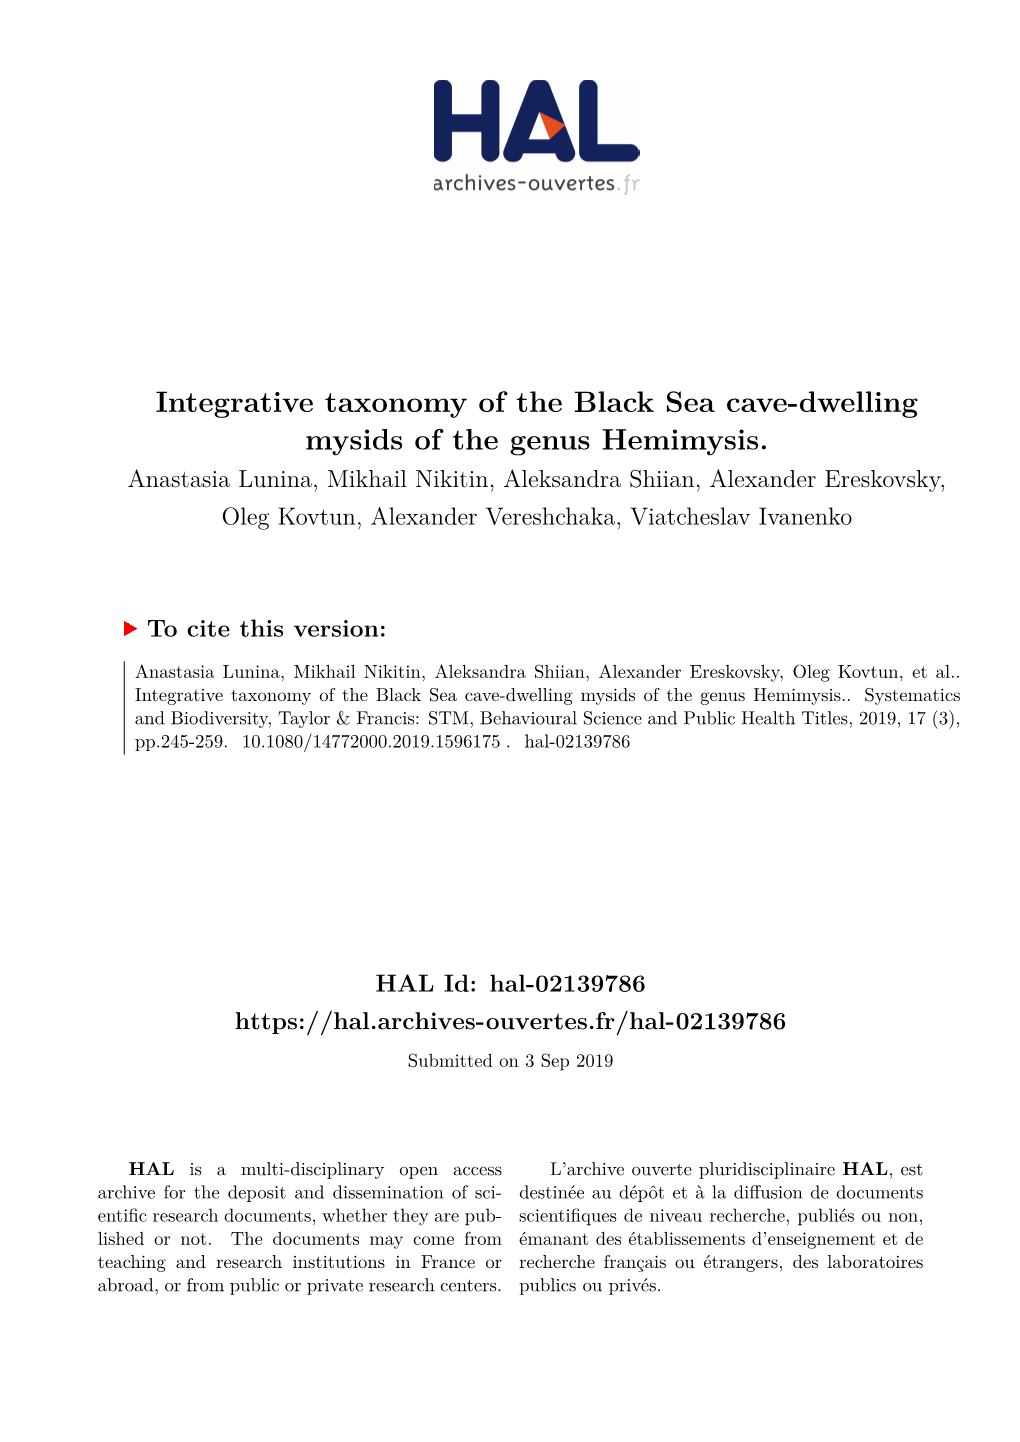 Integrative Taxonomy of the Black Sea Cave-Dwelling Mysids of the Genus Hemimysis